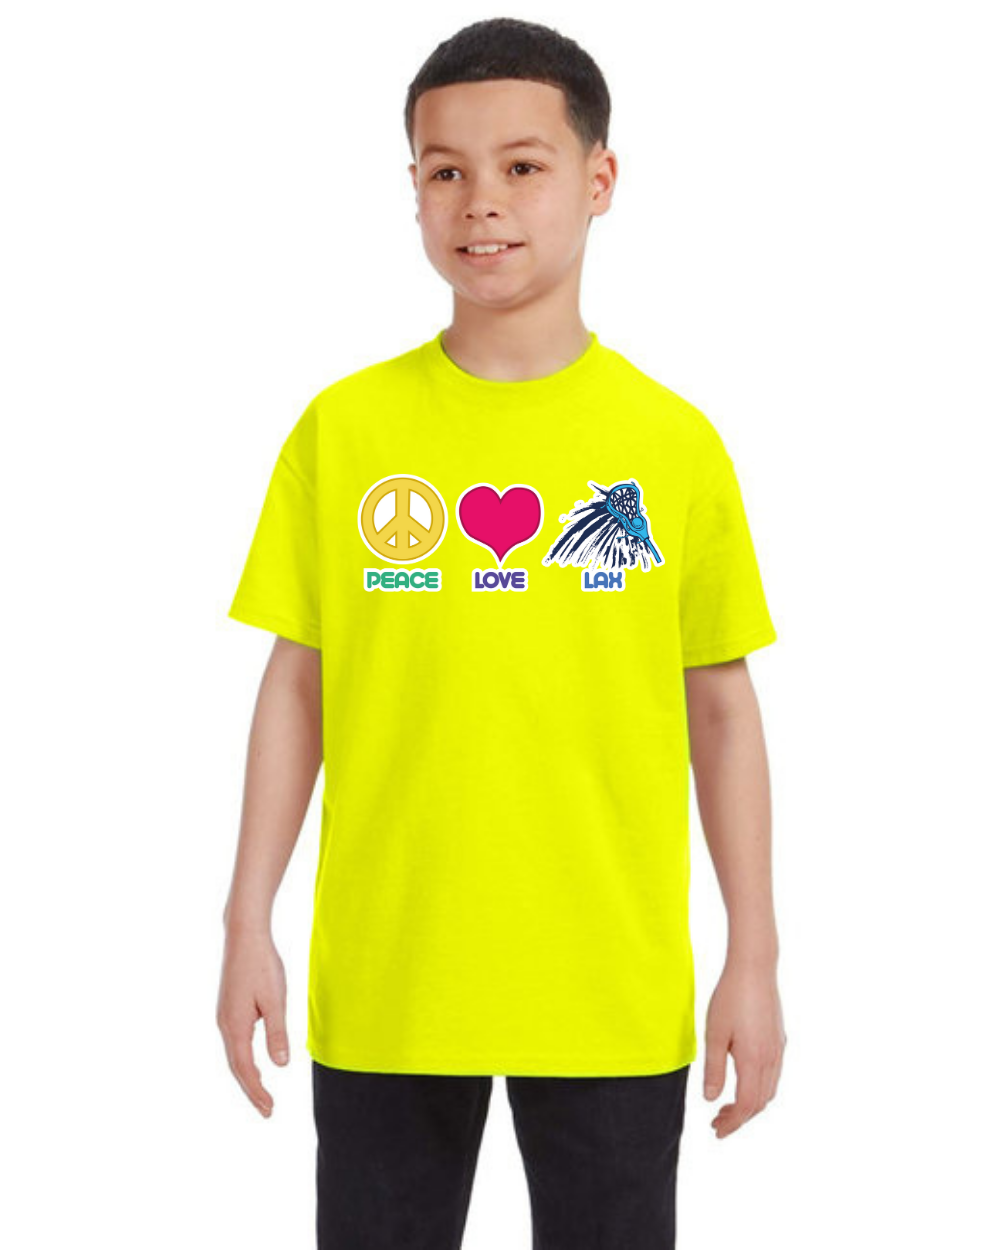 fashionable cotton crew neck clothing T-shirt tee shirt tie dye apparel